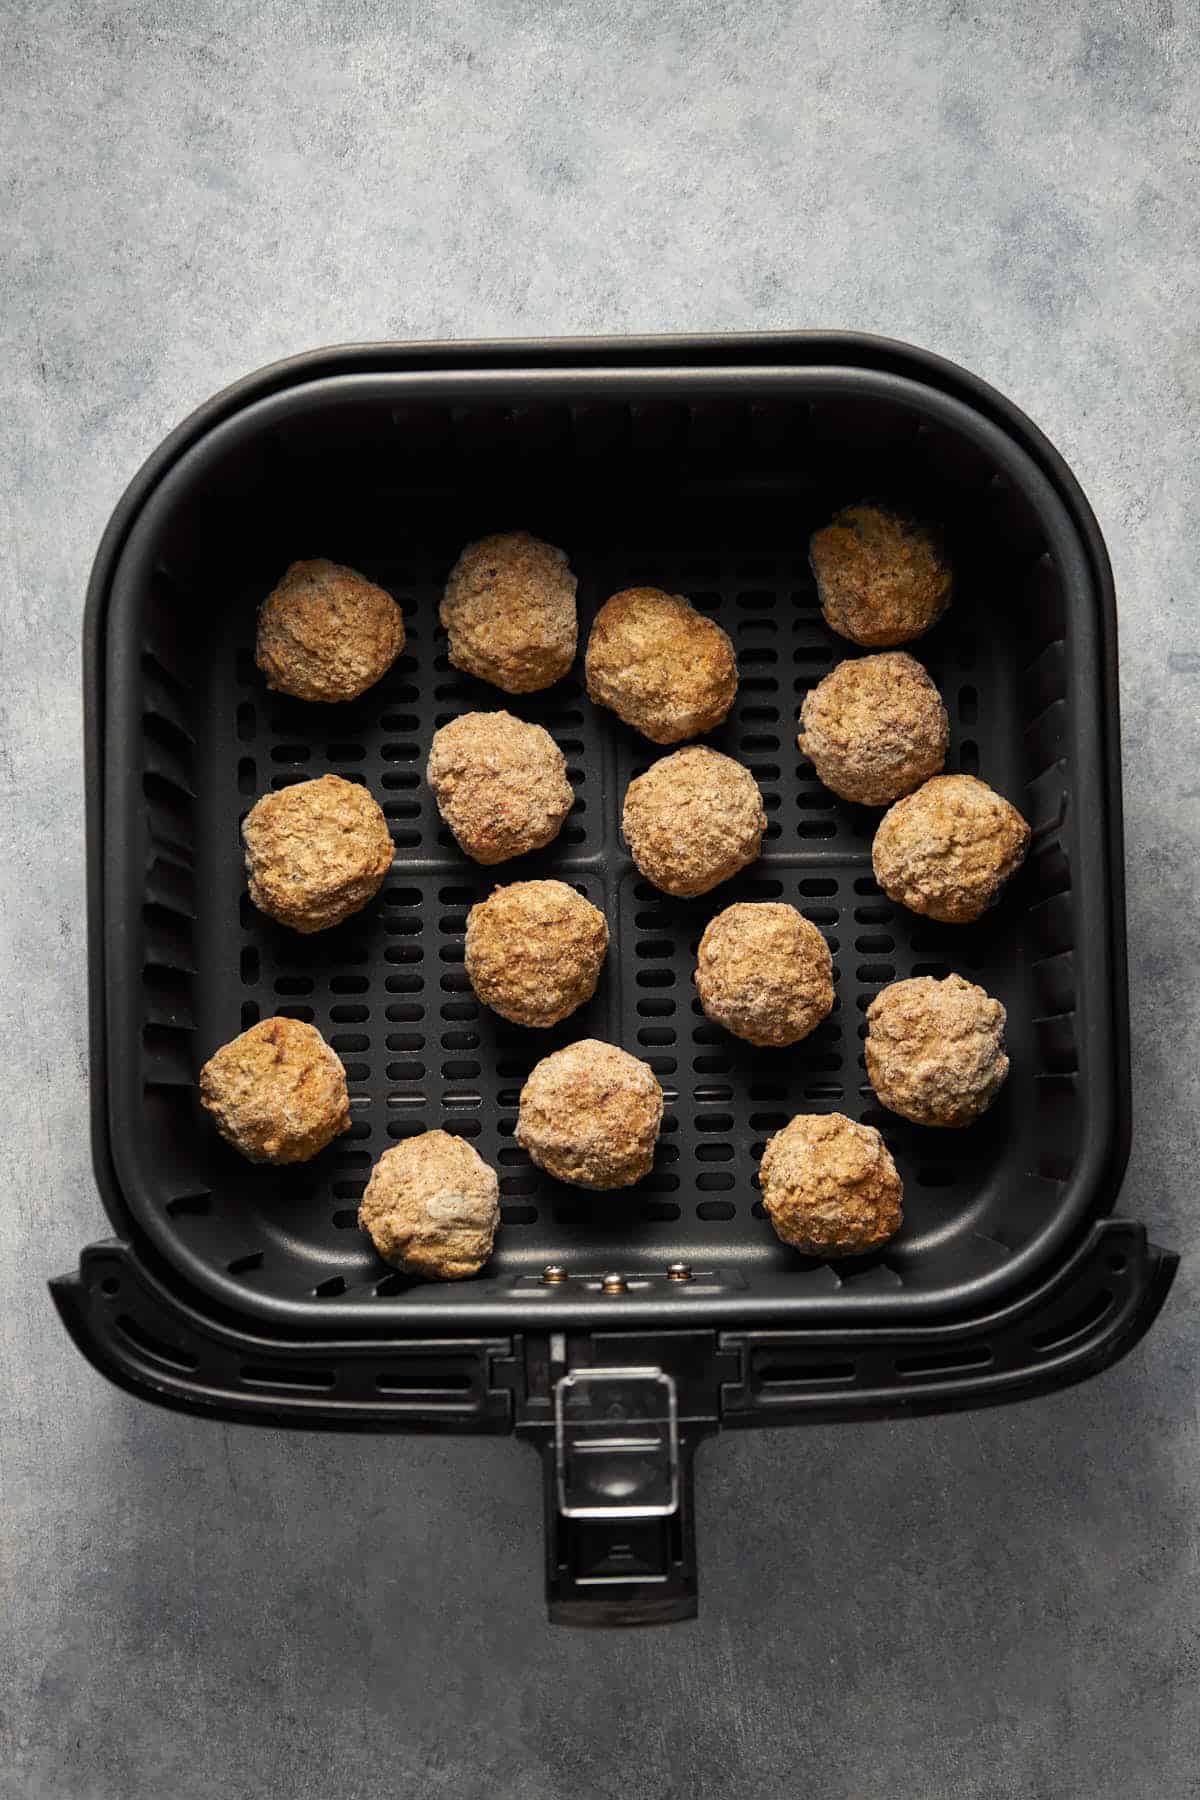 Frozen meatballs in the air fryer basket before cooking.